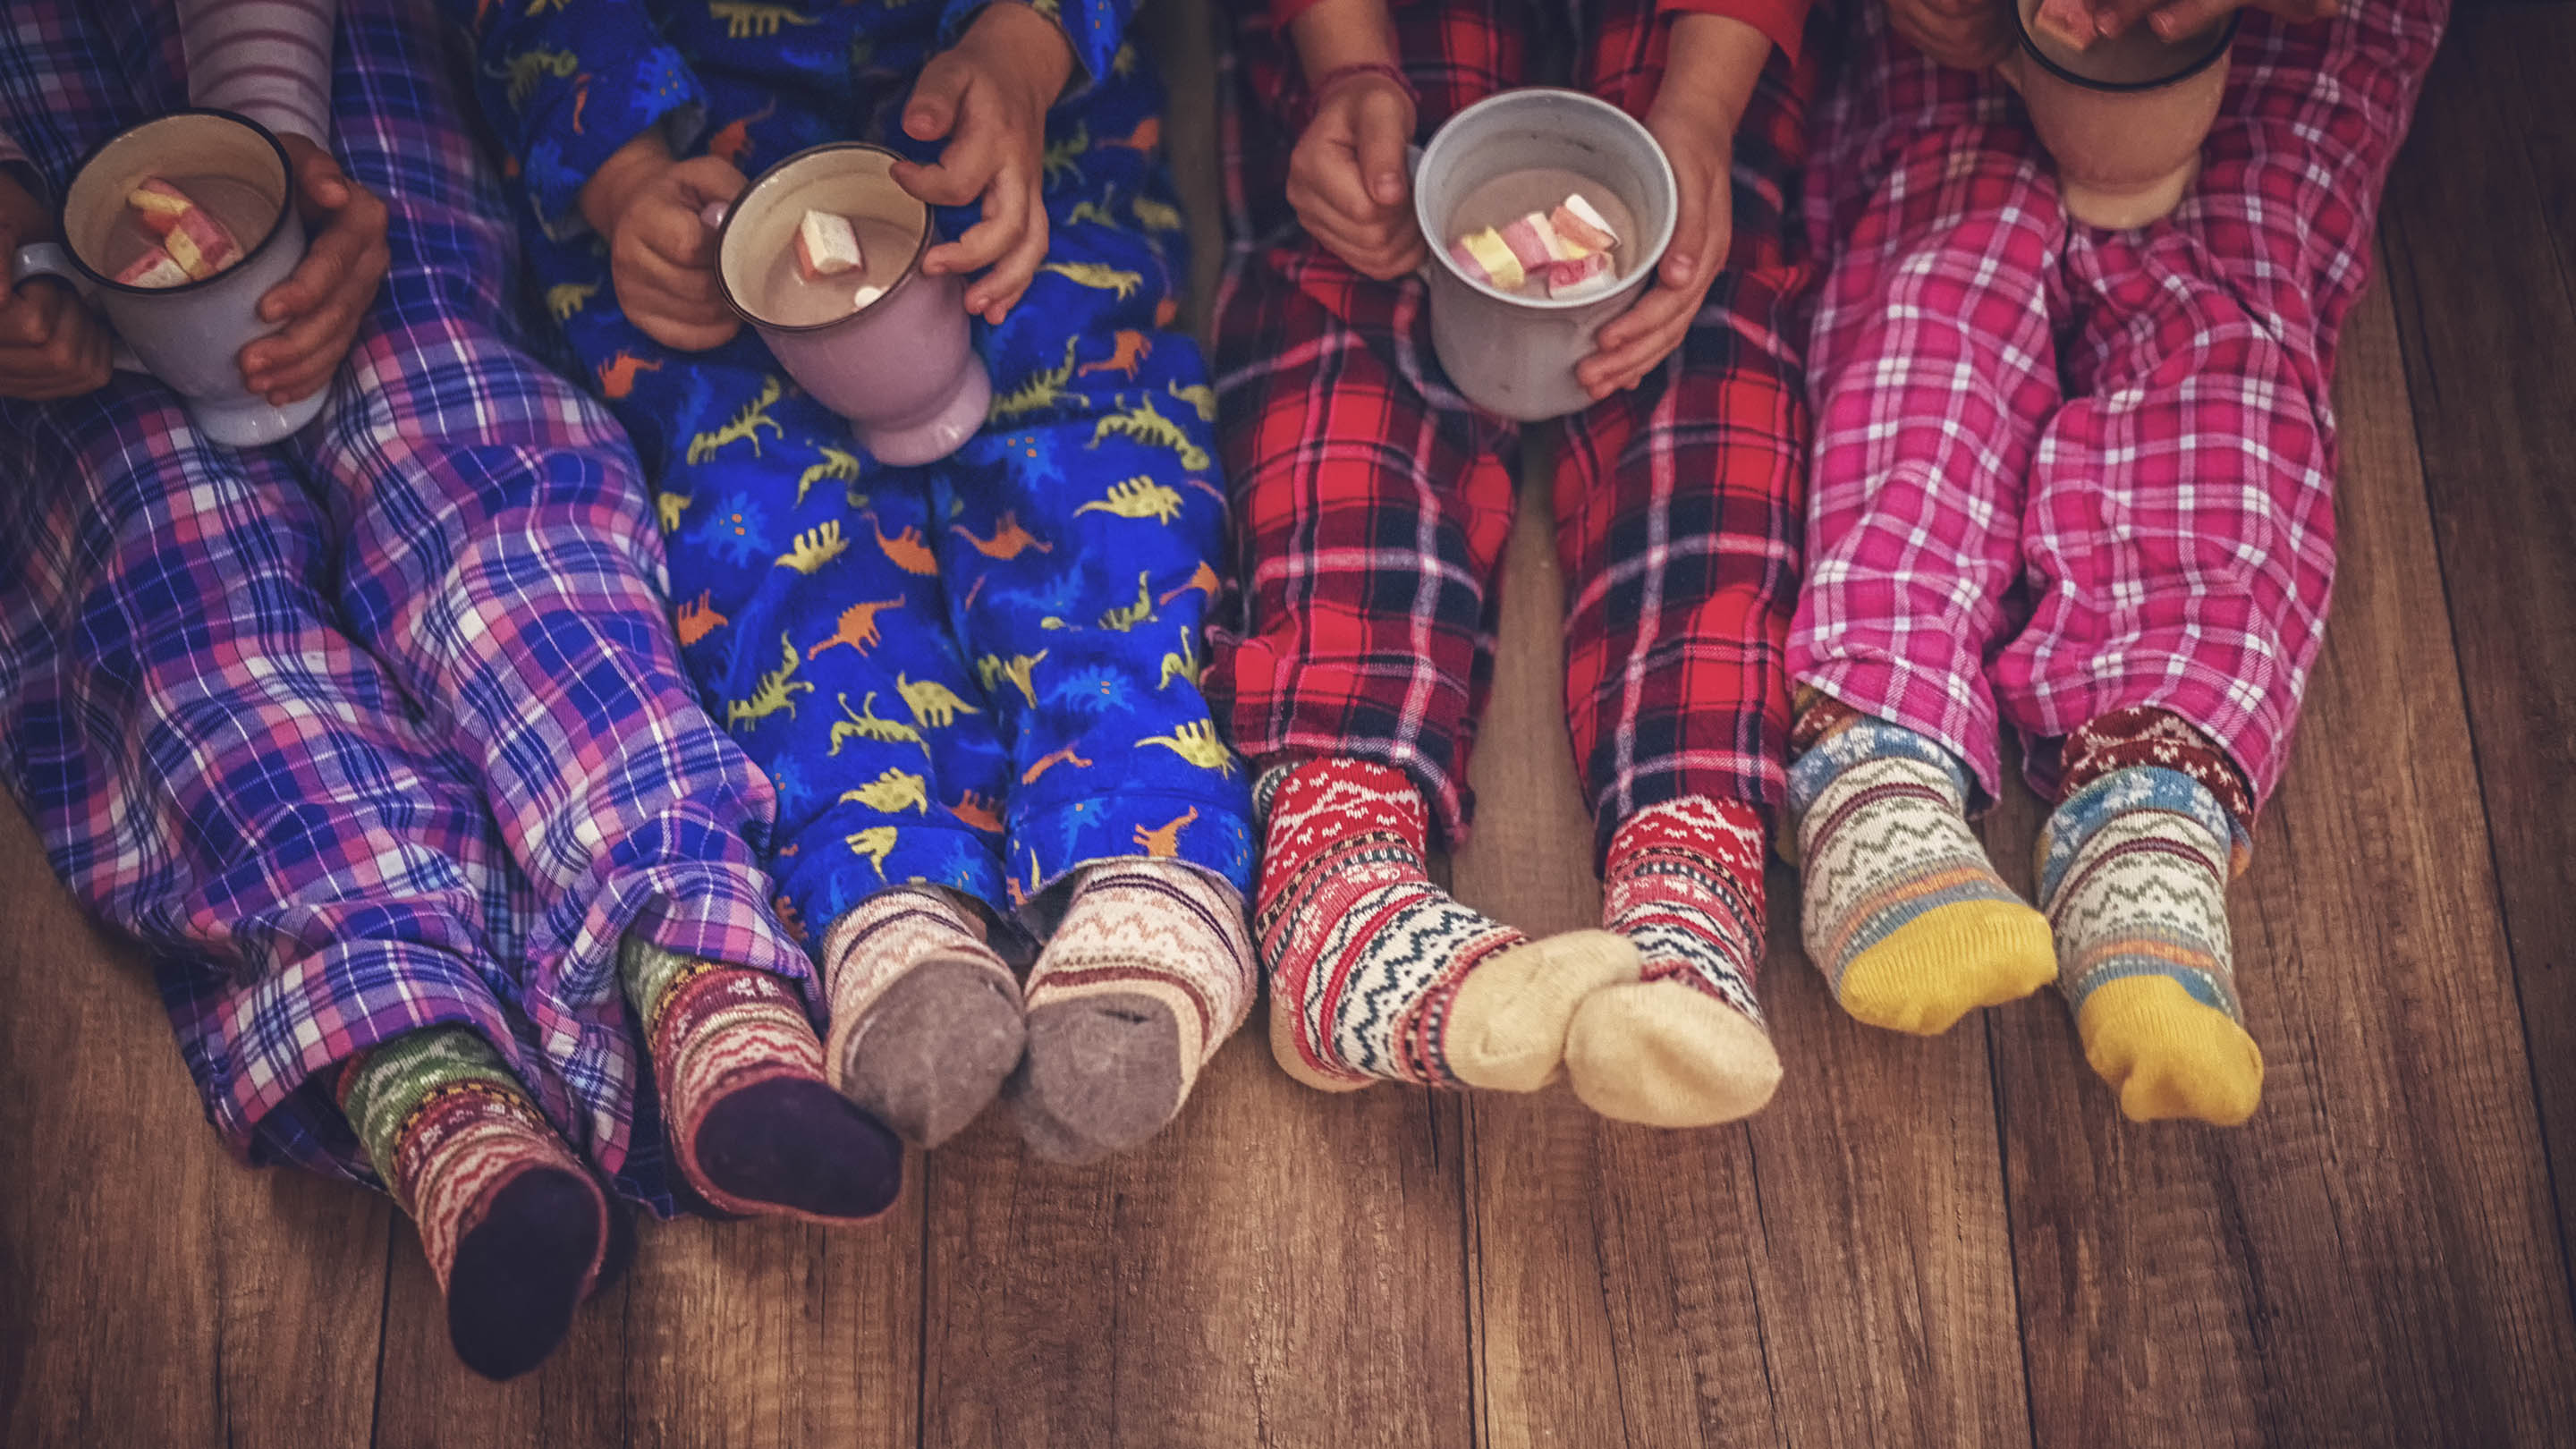 Kids in pyjamas with hot chocolate